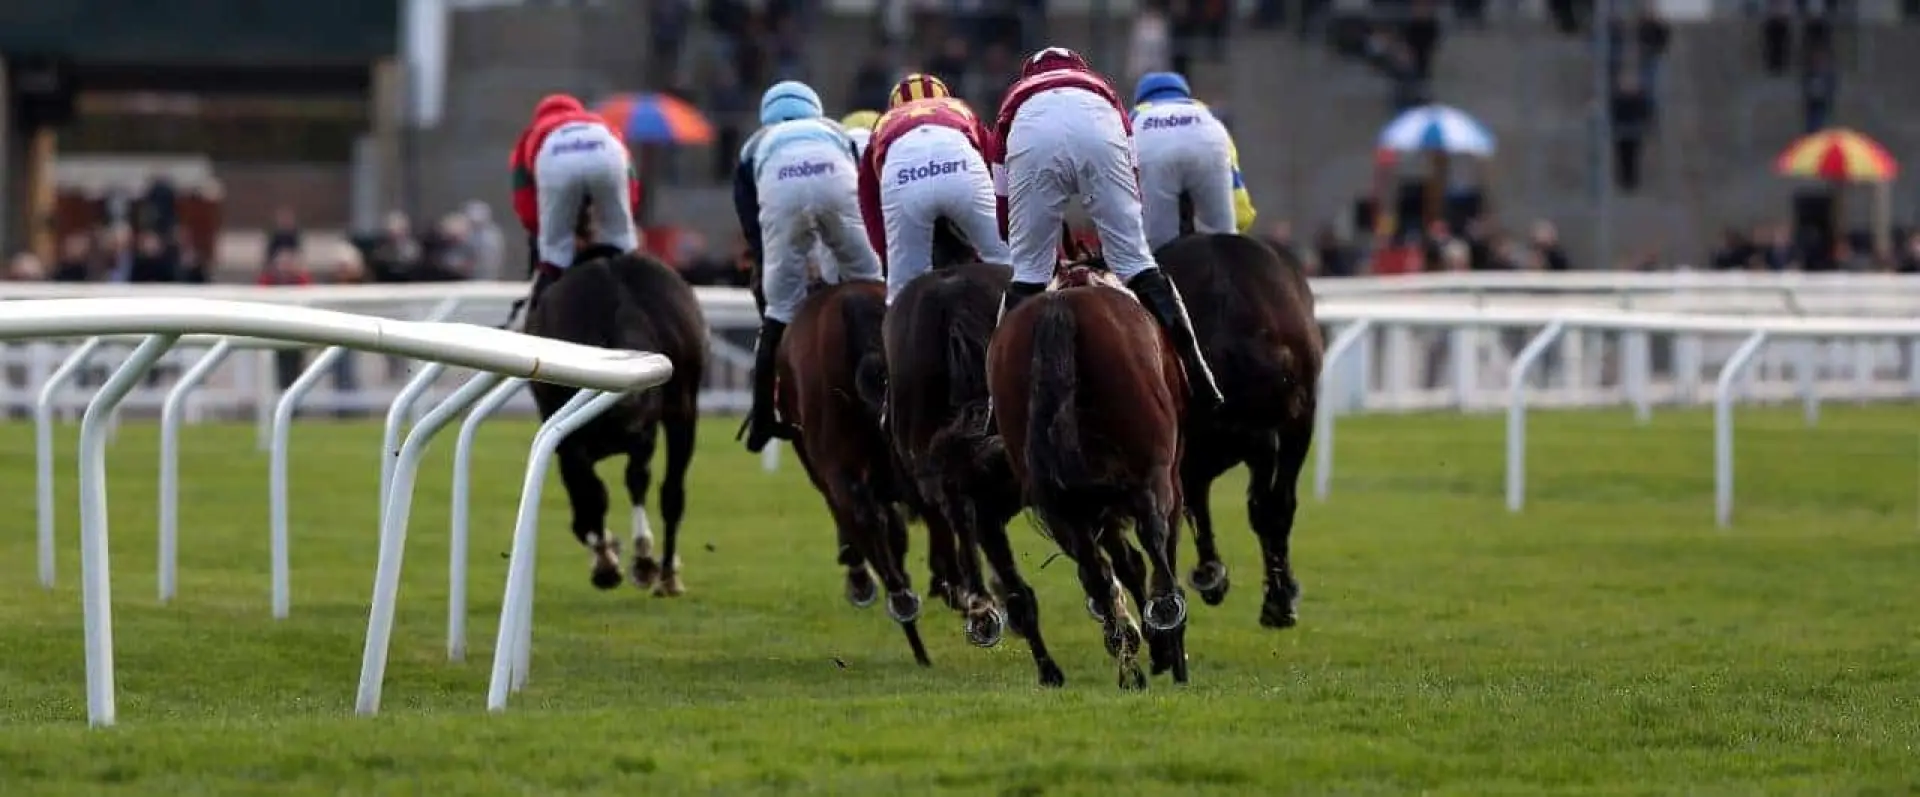 Cheltenham Festival odds, Cheltenham odds, Horse Racing odds, Ms Parfois odds, Maria's Benefit odds, Black Corton odds